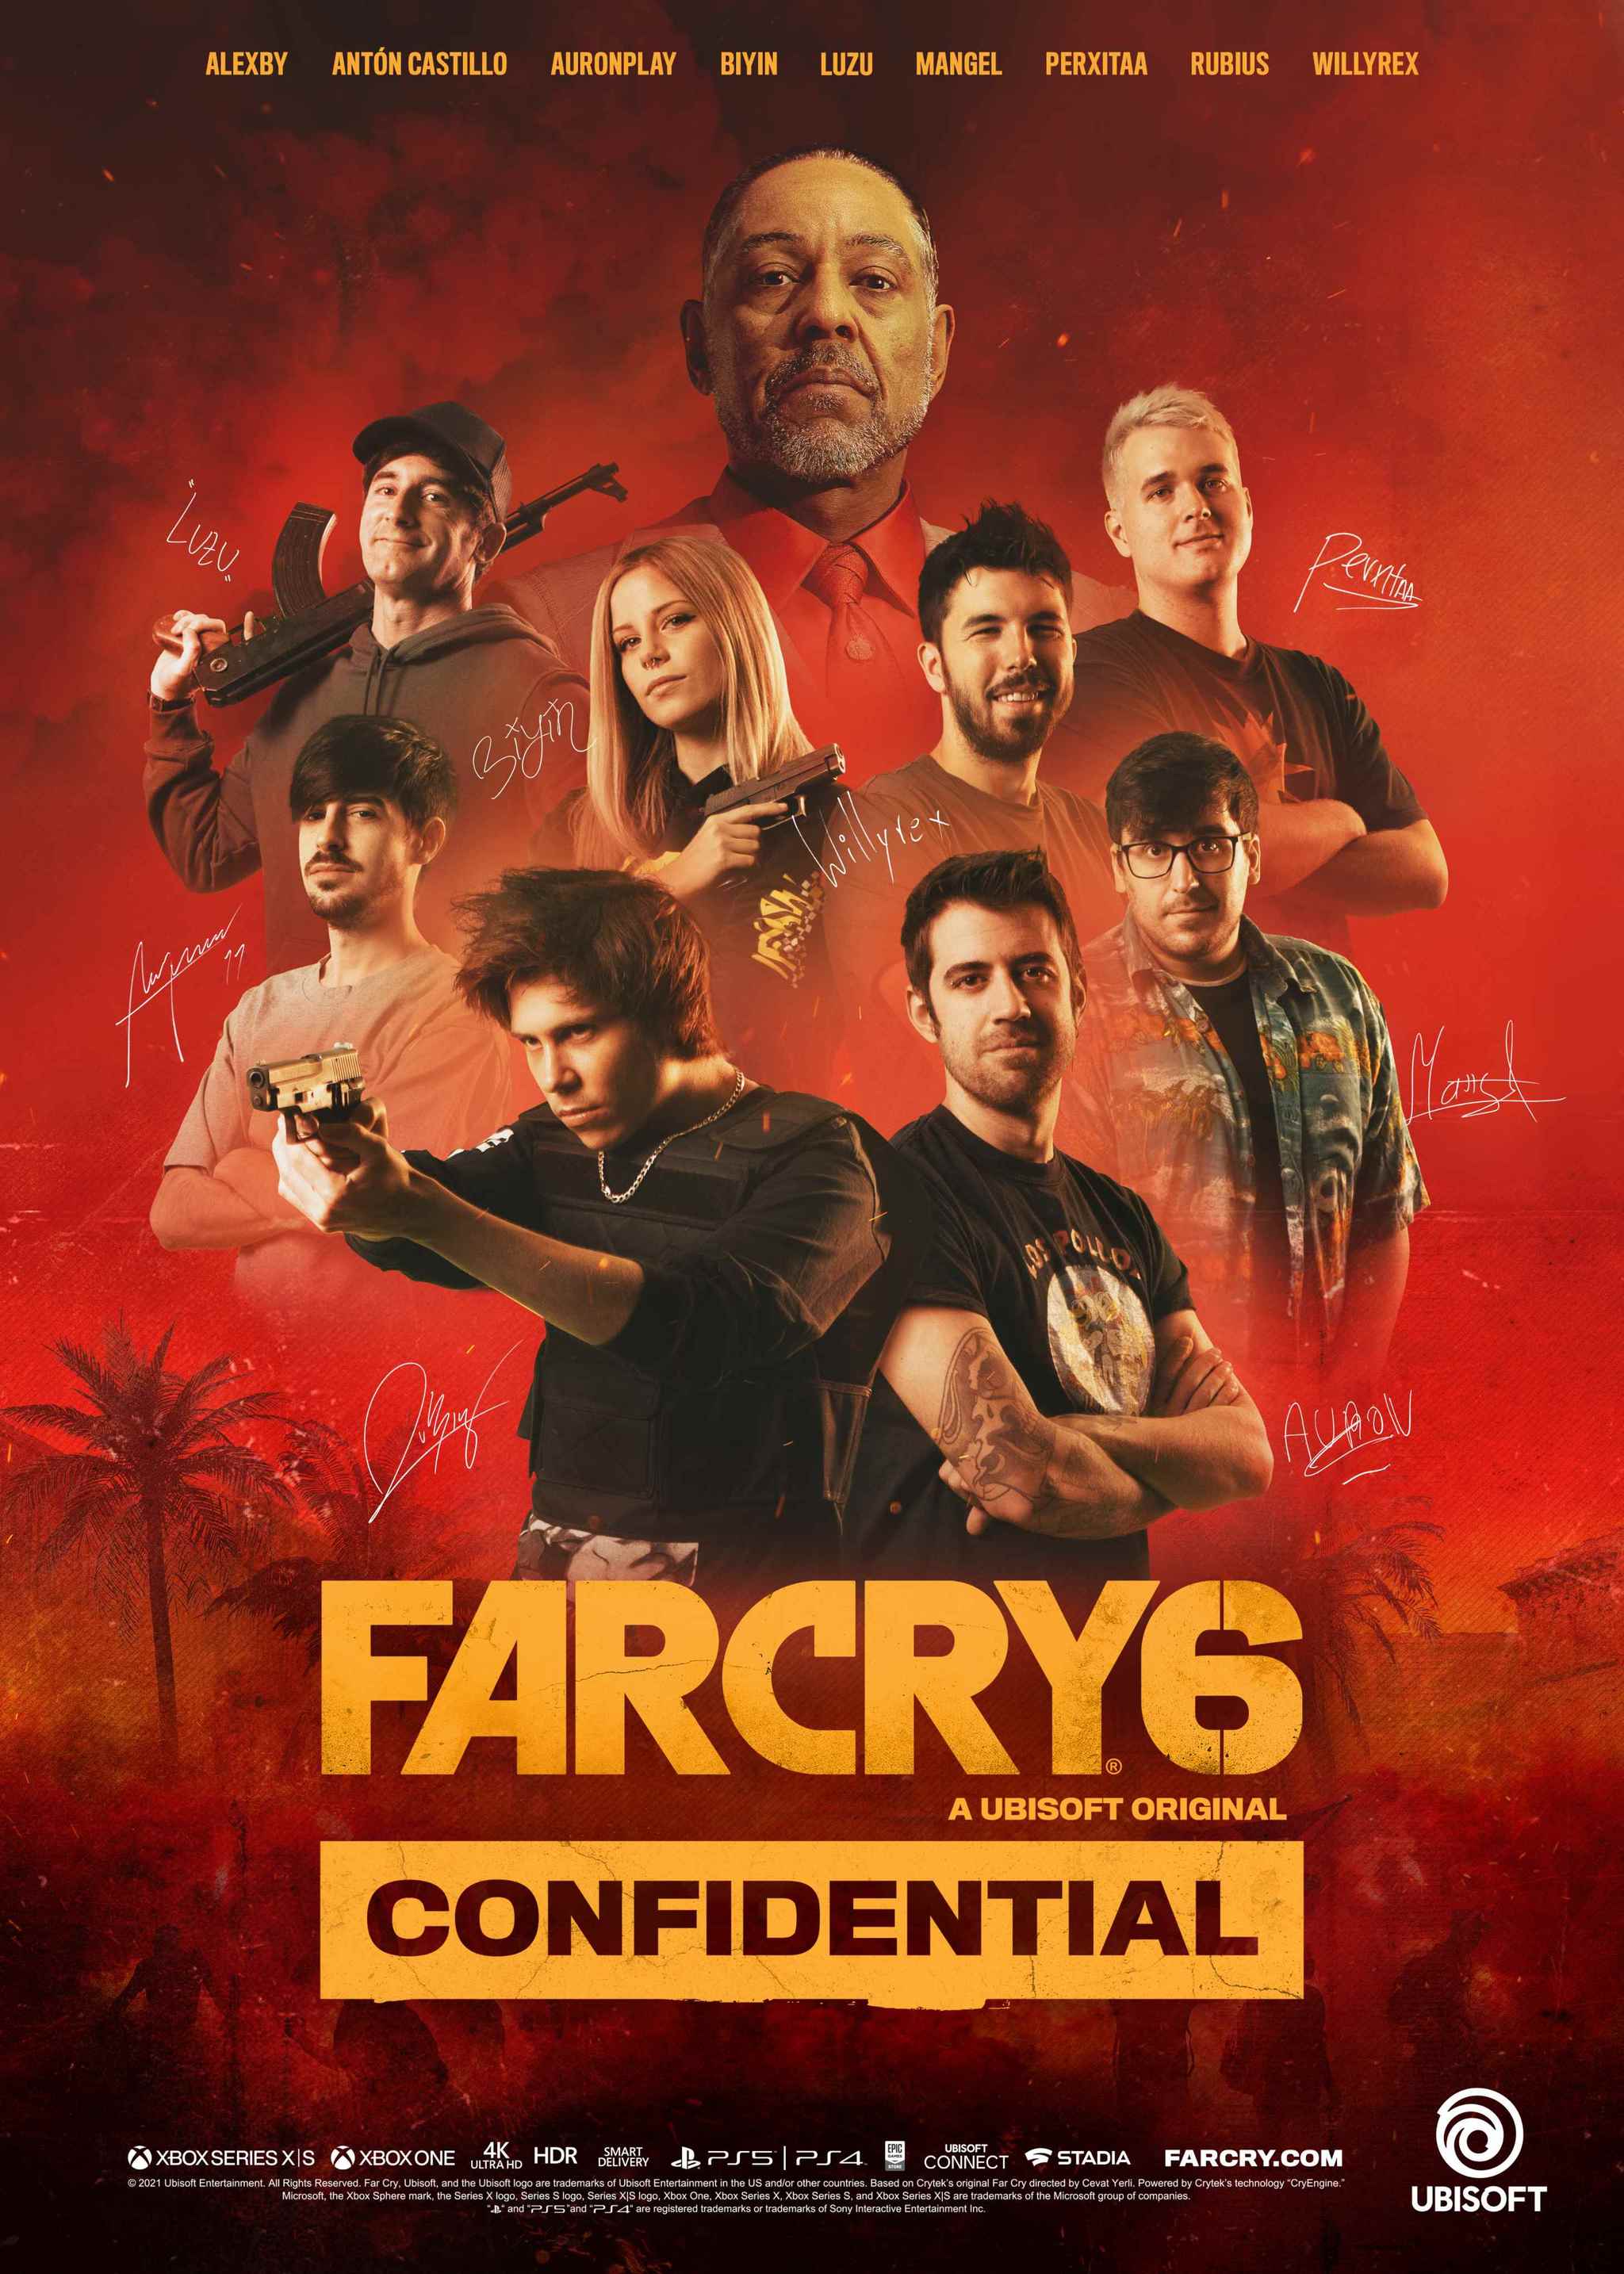 Cartel promocional de Far Cry 6 Confidential